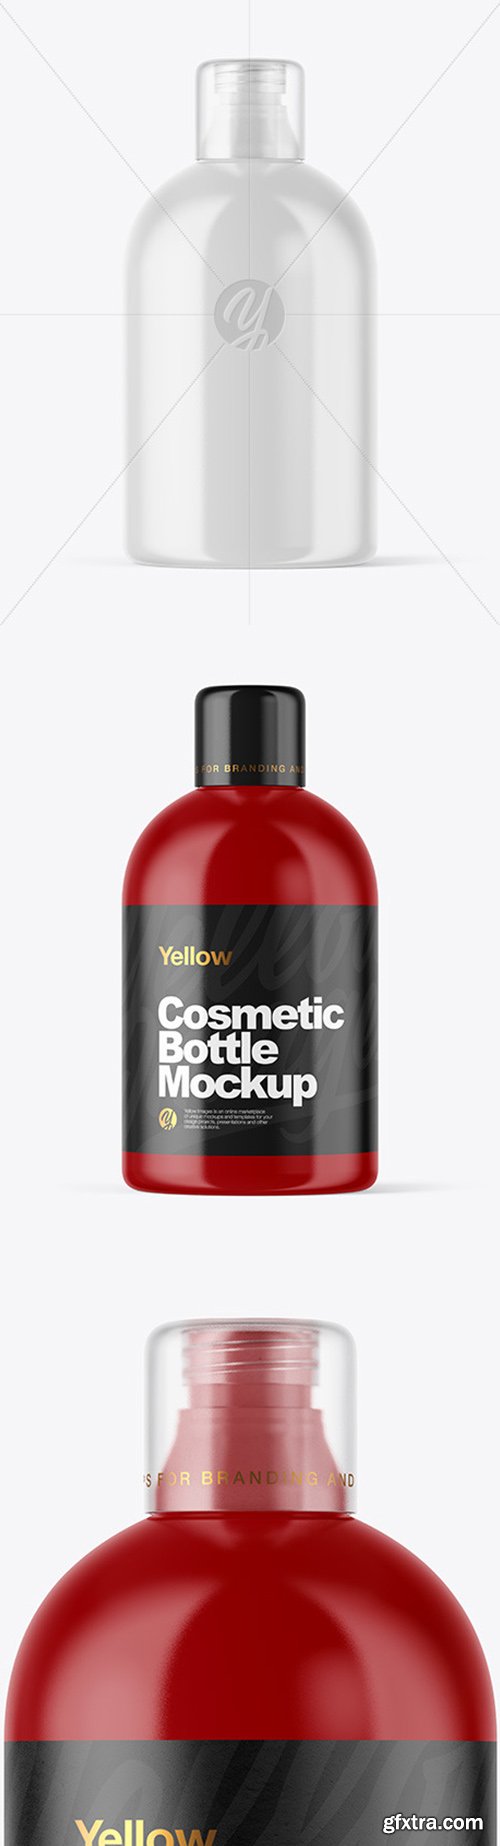 Glossy Cosmetic Bottle Mockup 51100